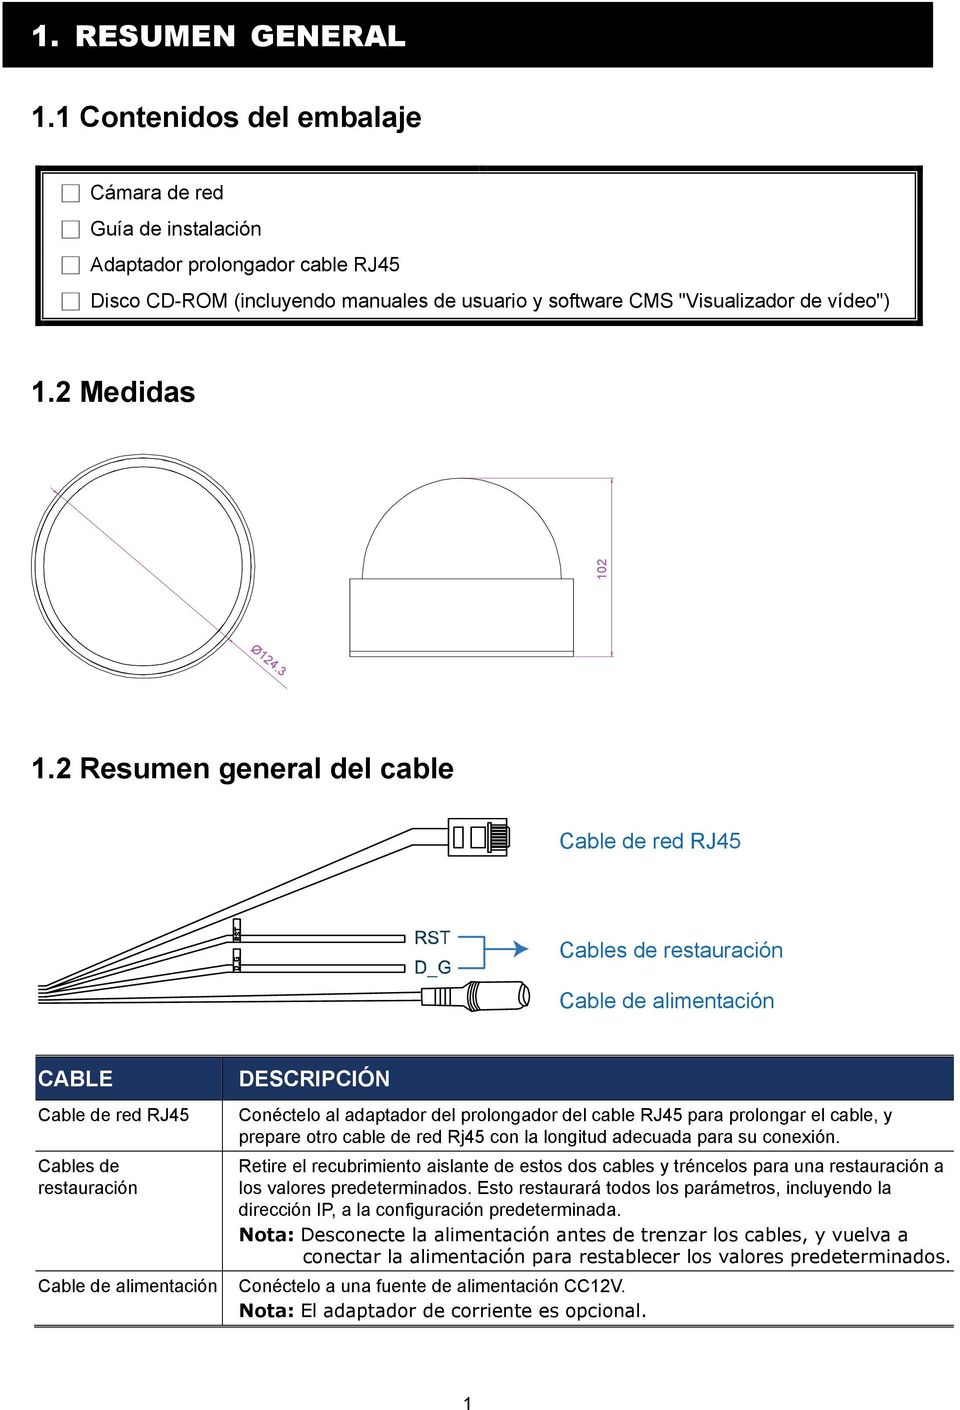 3 1.2 Resumen general del cable Cable de red RJ45 Cables de restauración Cable de alimentación CABLE Cable de red RJ45 Cables de restauración DESCRIPCIÓN Conéctelo al adaptador del prolongador del